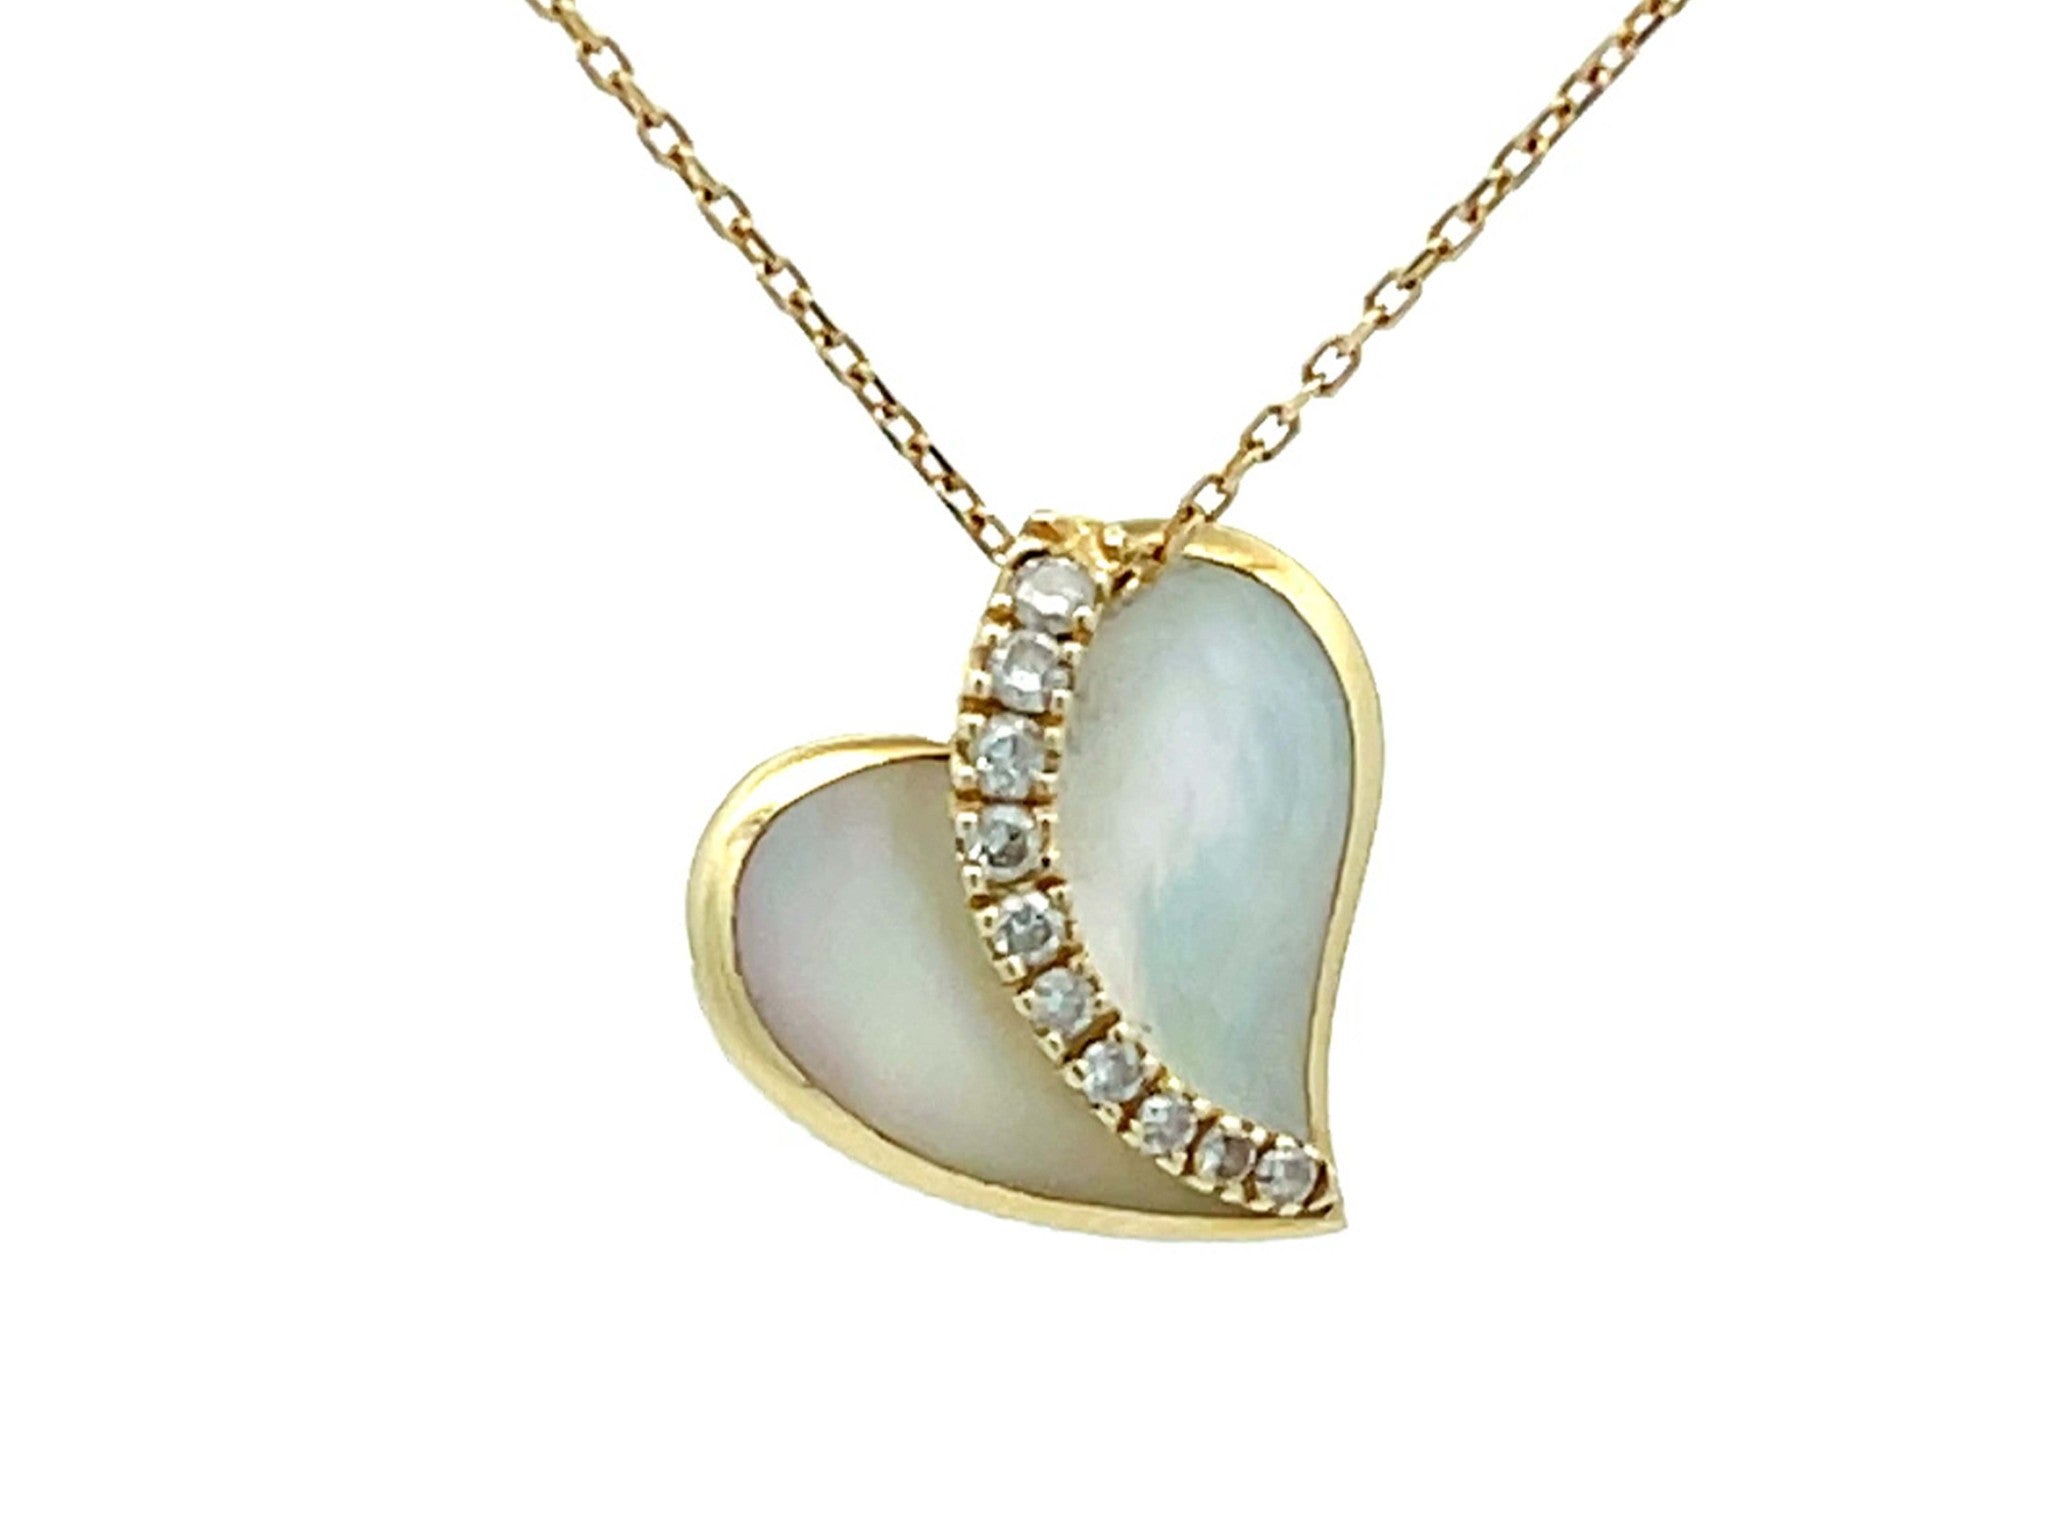 NaHoku Diamond Heart Necklace in 14k Yellow Gold